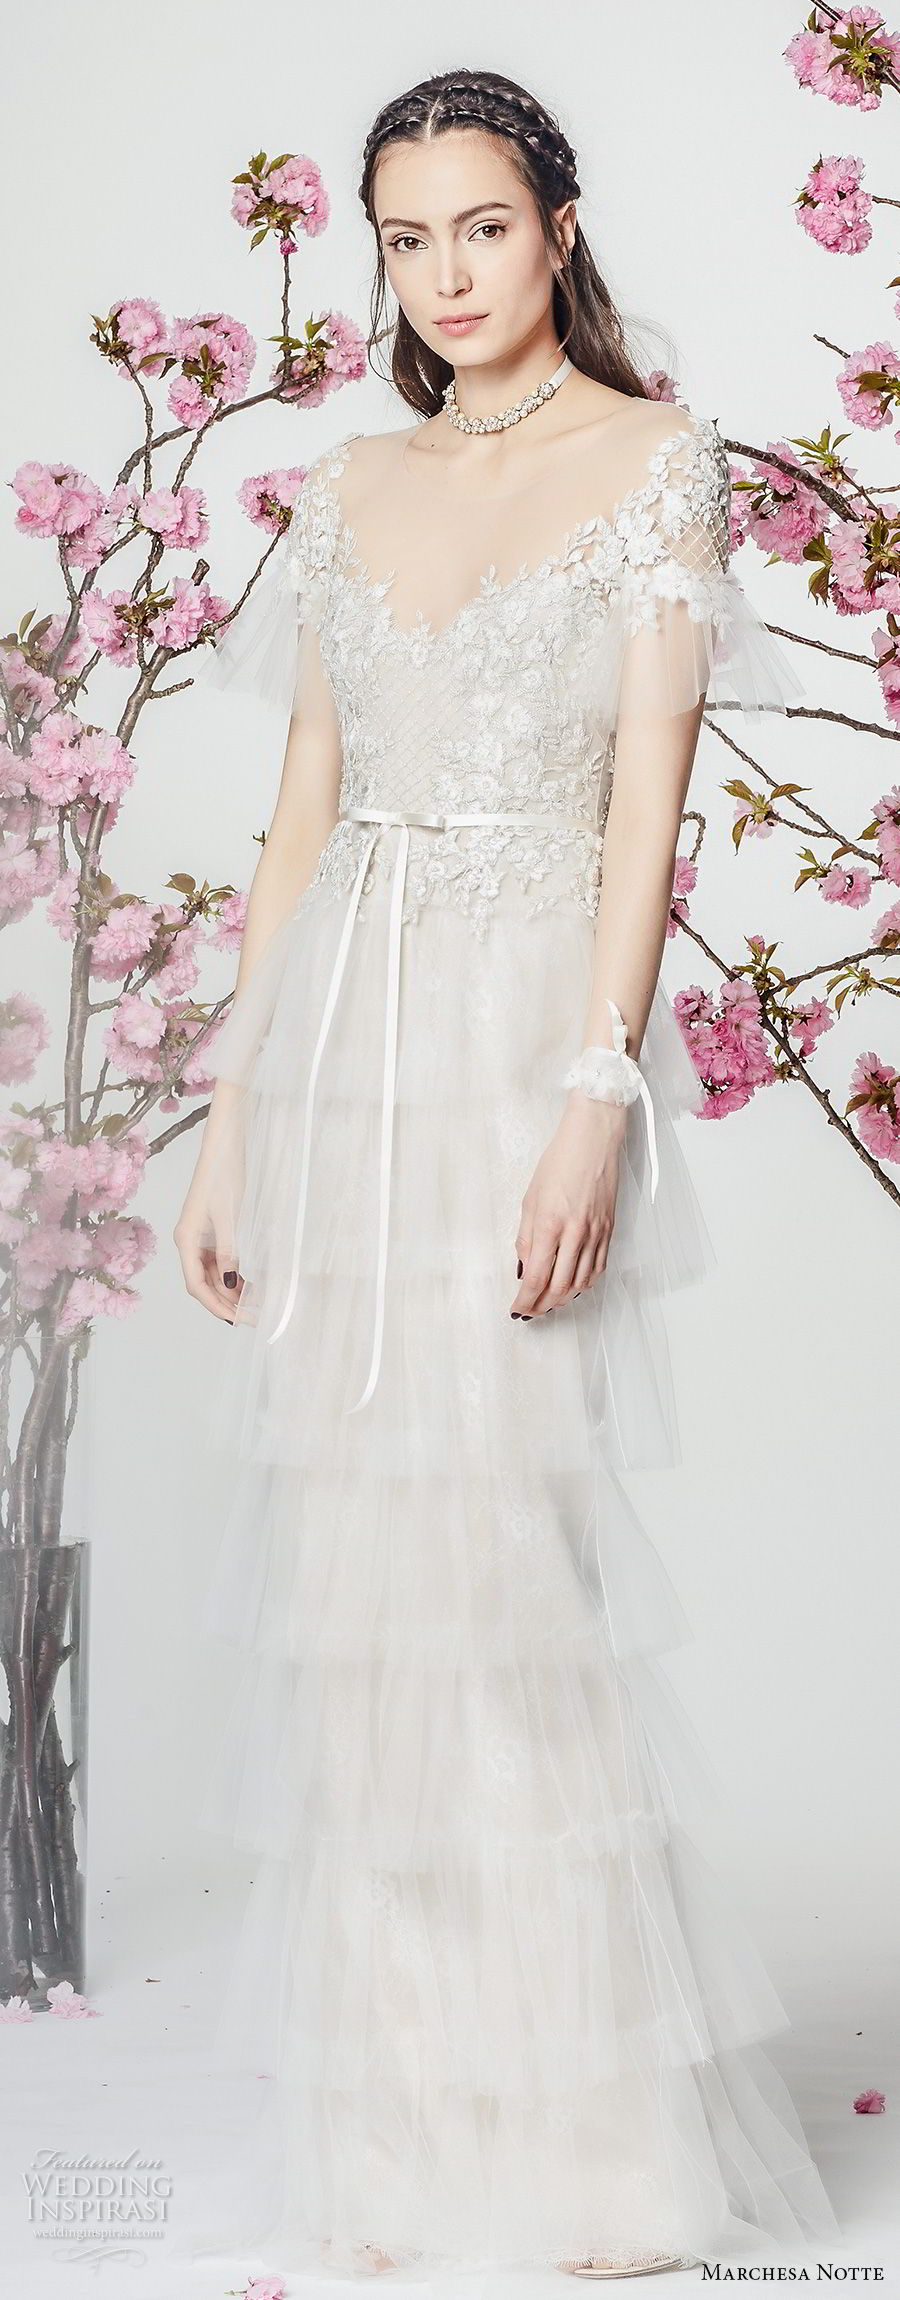 marchesa notte spring 2018 bridal short sleeves scoop neckline heavily embellished bodice layered skirt romantic column wedding dress (9) mv